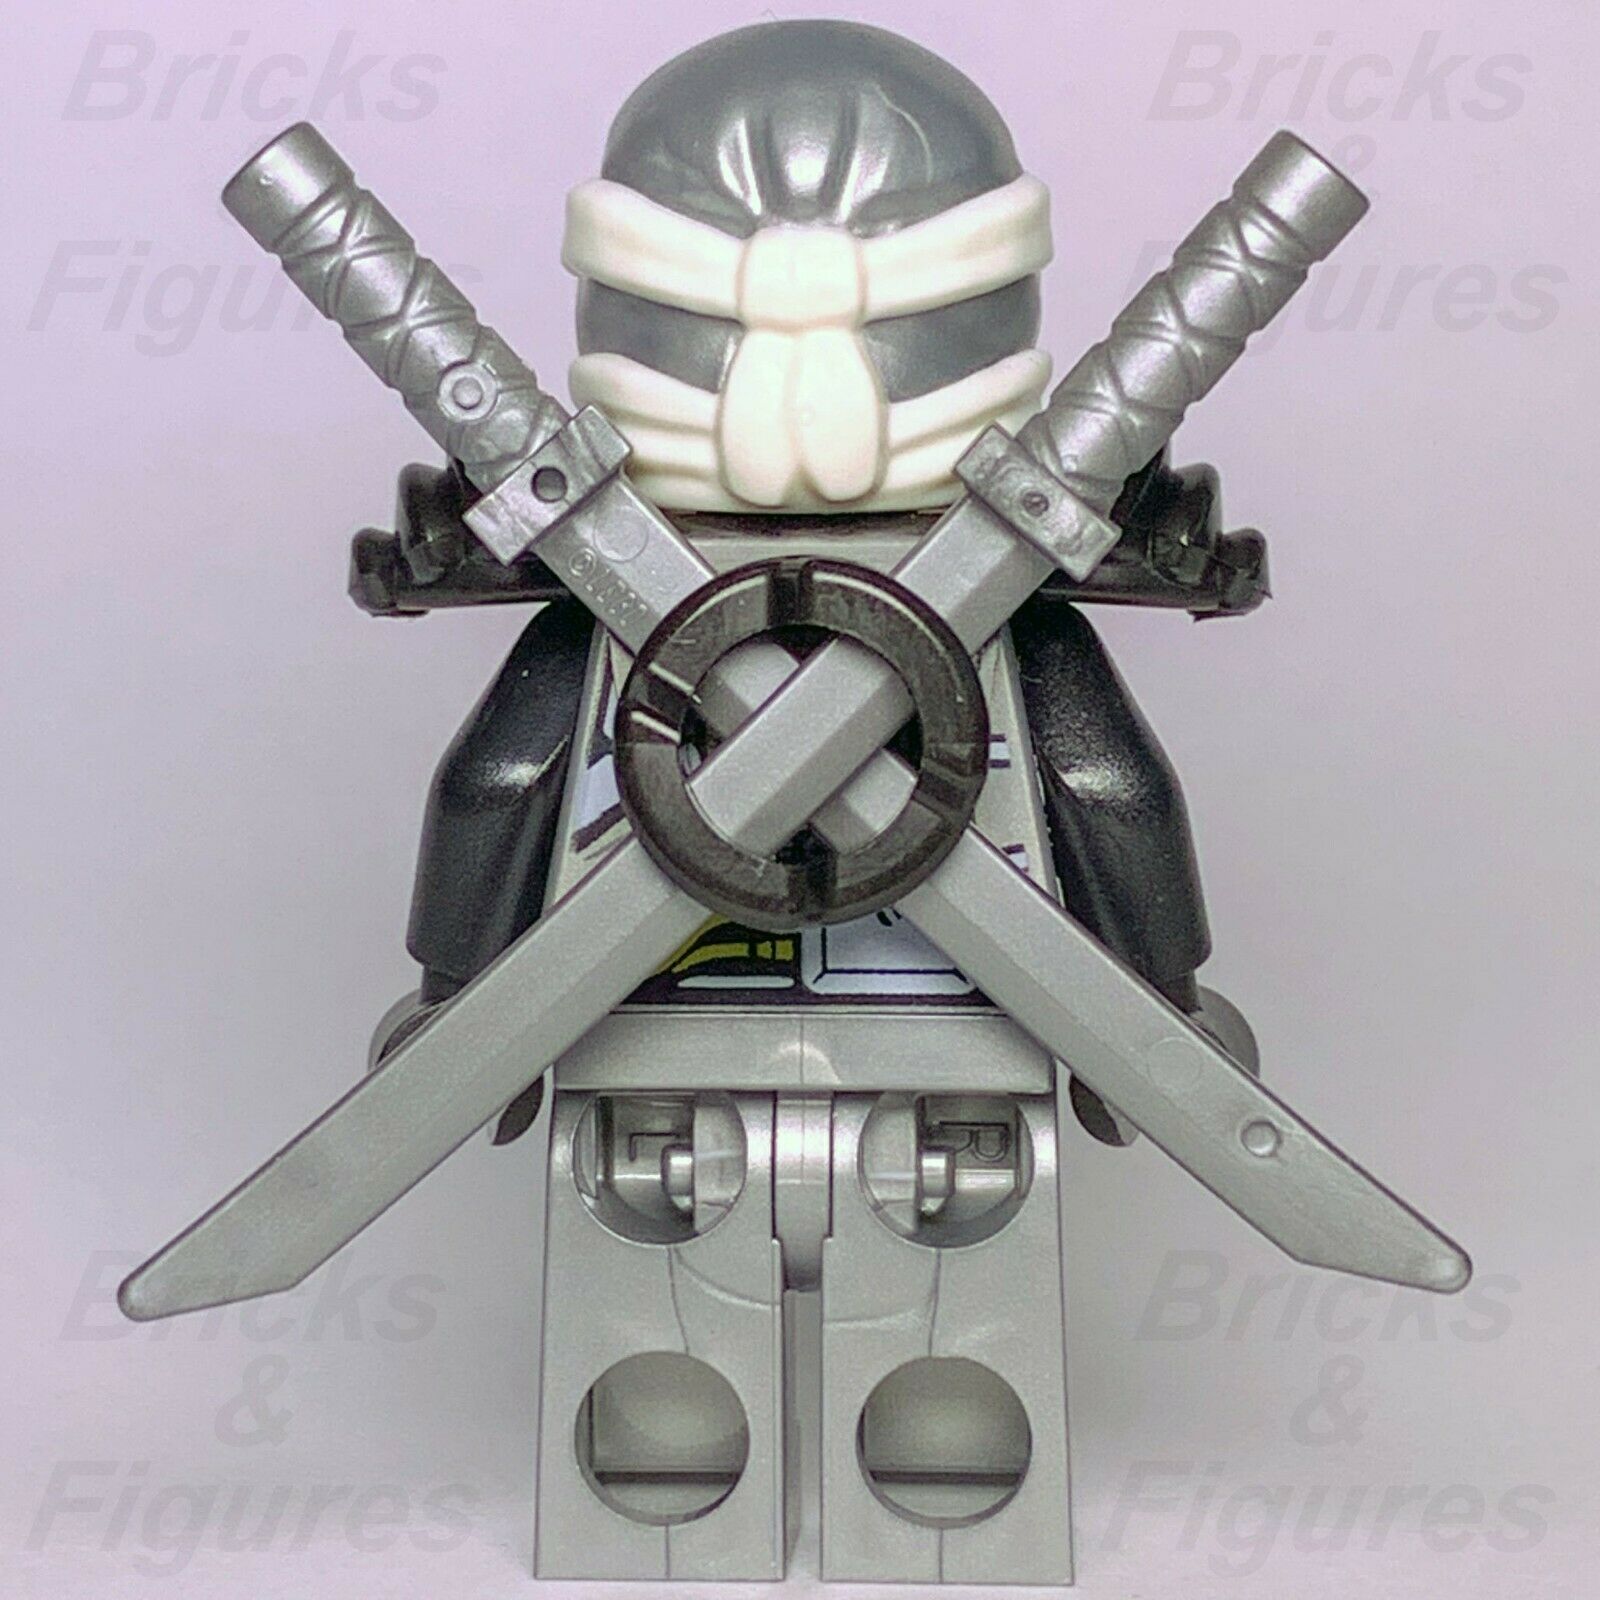 New Ninjago LEGO Ninja Zane Hands of Time Minifigure from Genuine Set 70624 - Bricks & Figures